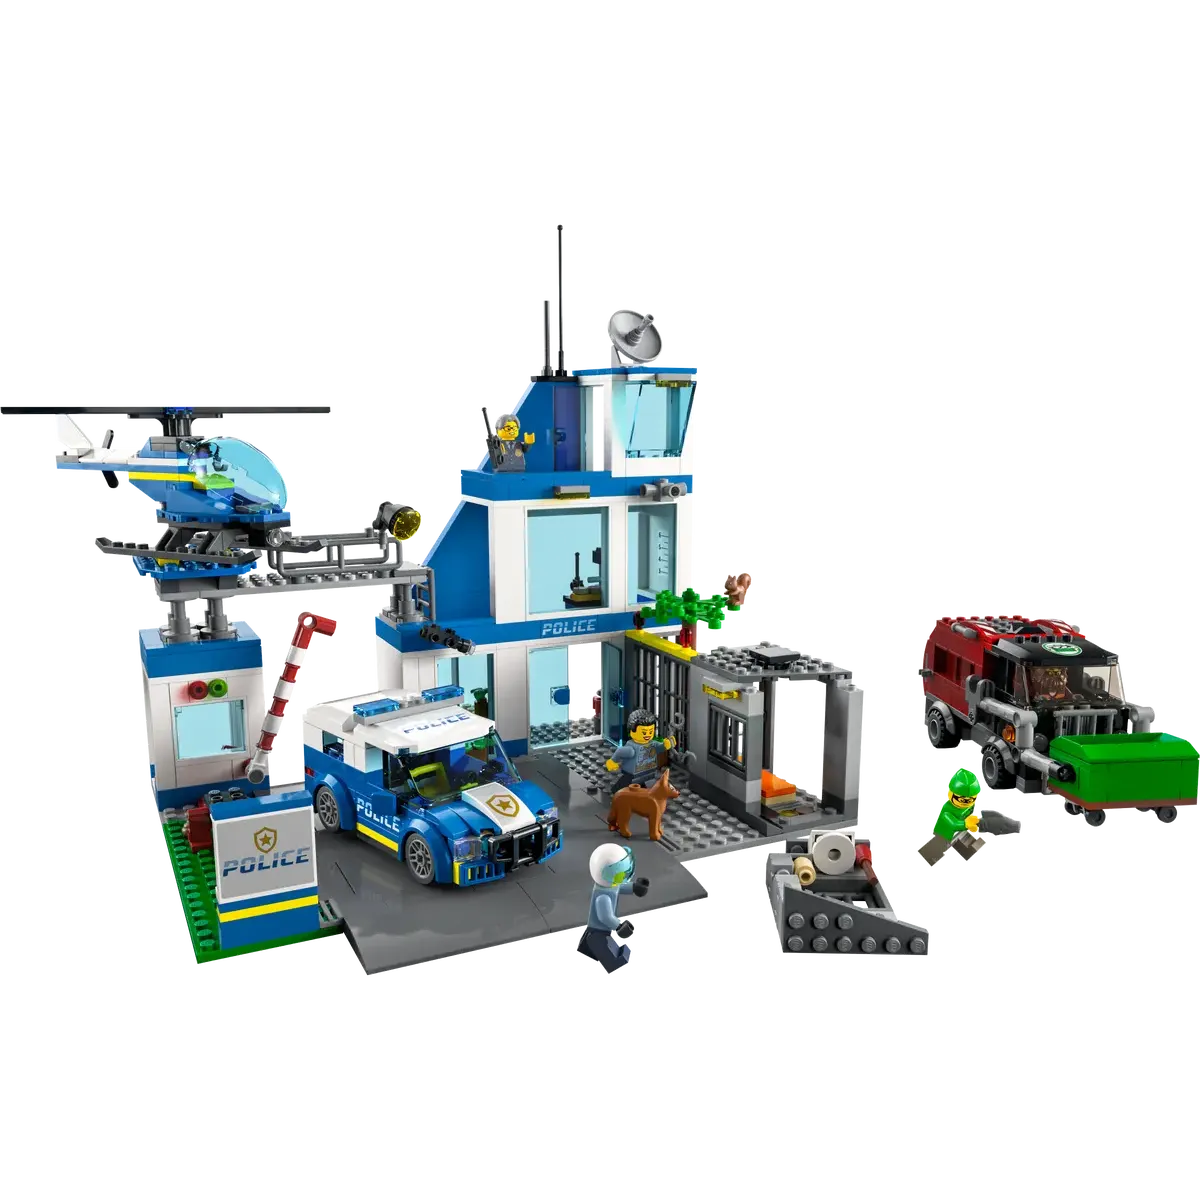 Police Station - LEGO City